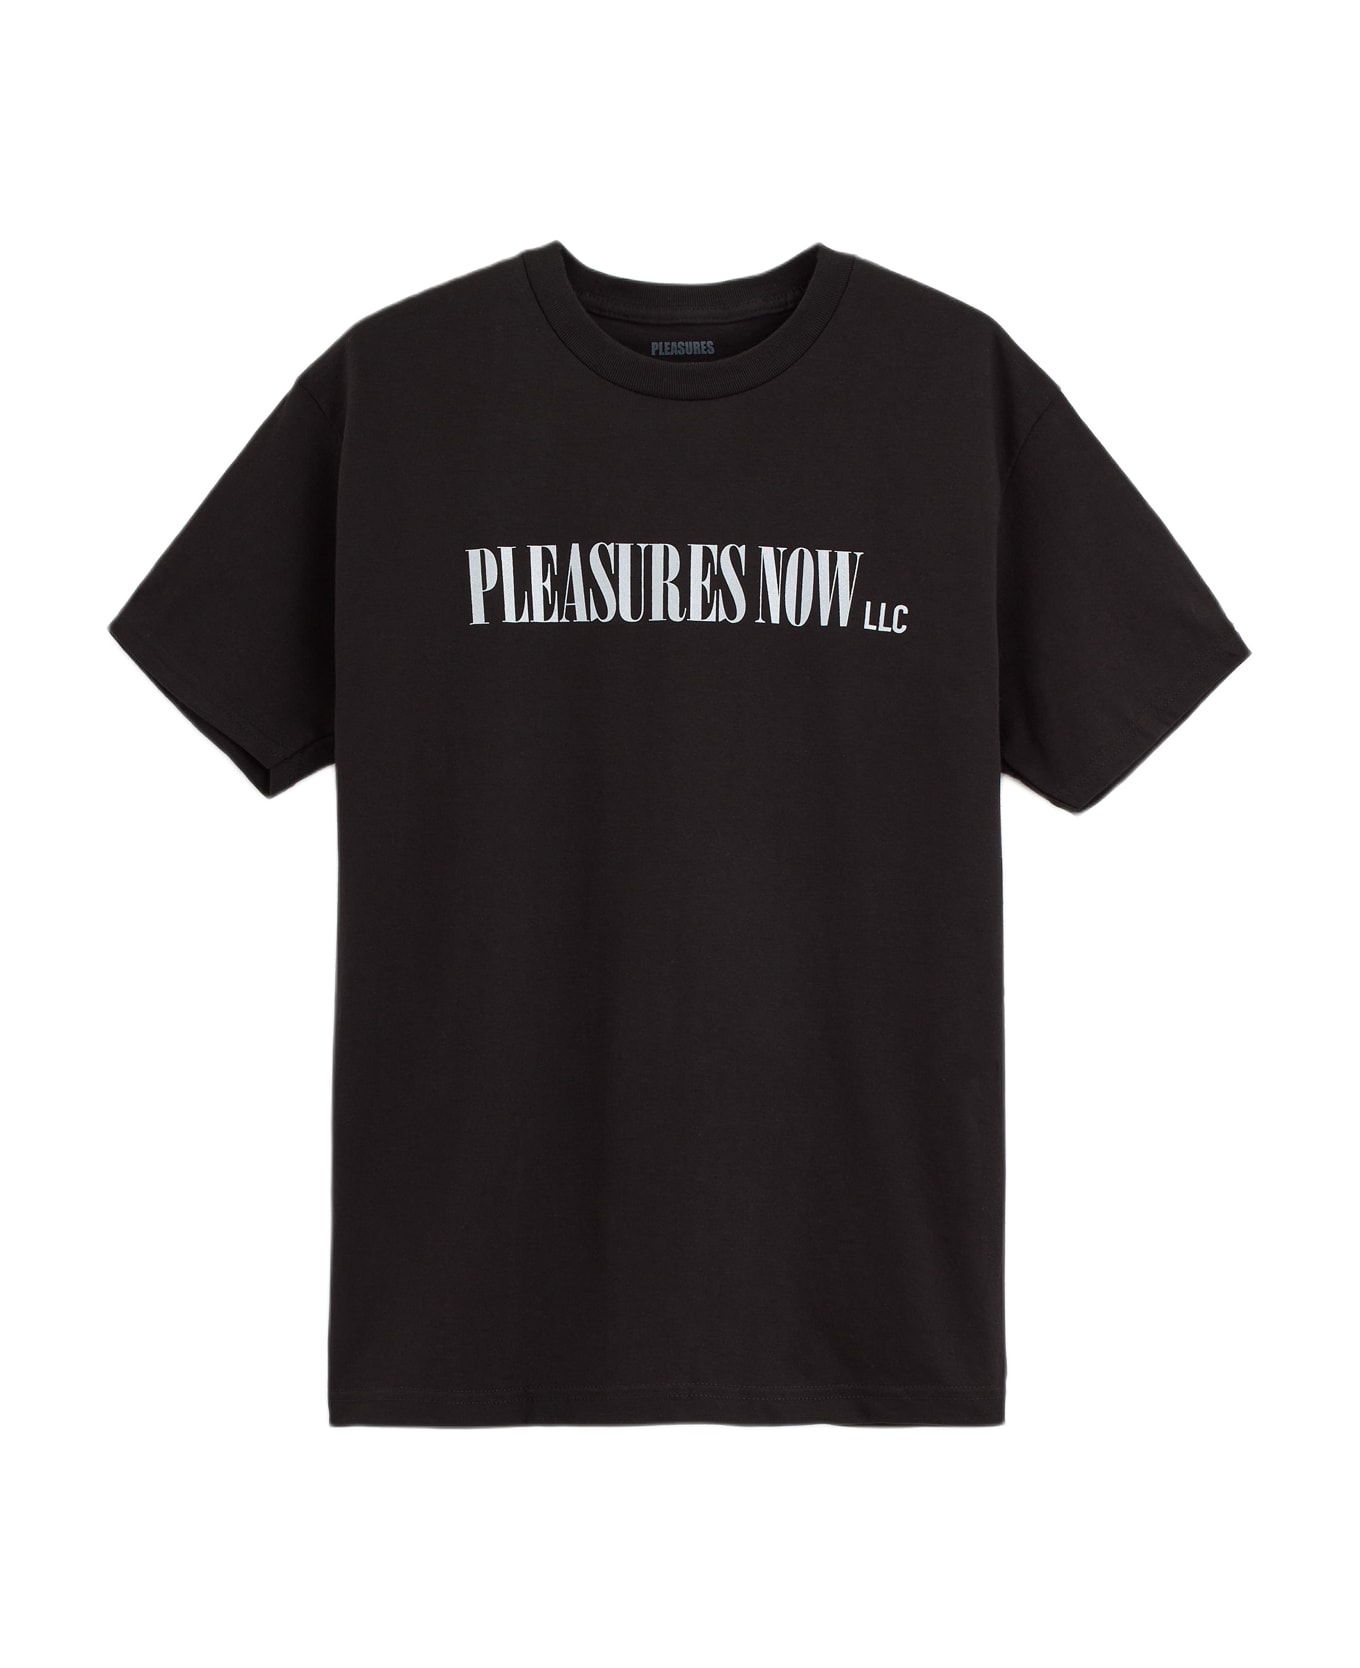 Pleasures Llc T-shirt - black